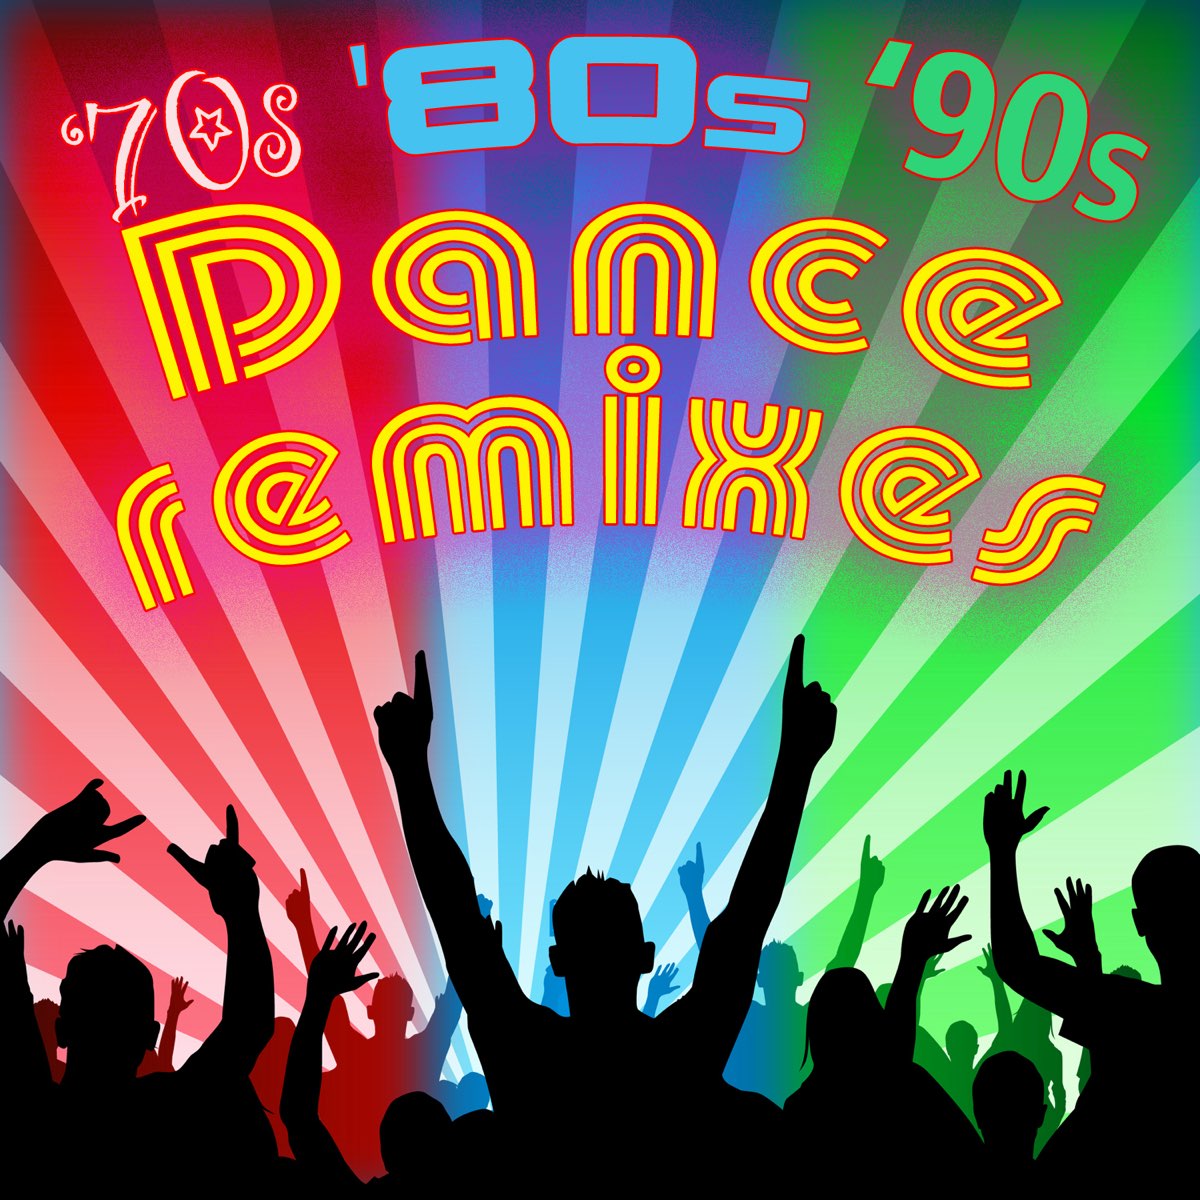 Zorba s dance remix. Dance 90s. Funk Music 70's. Let's Dance картинка. Rise up Club.